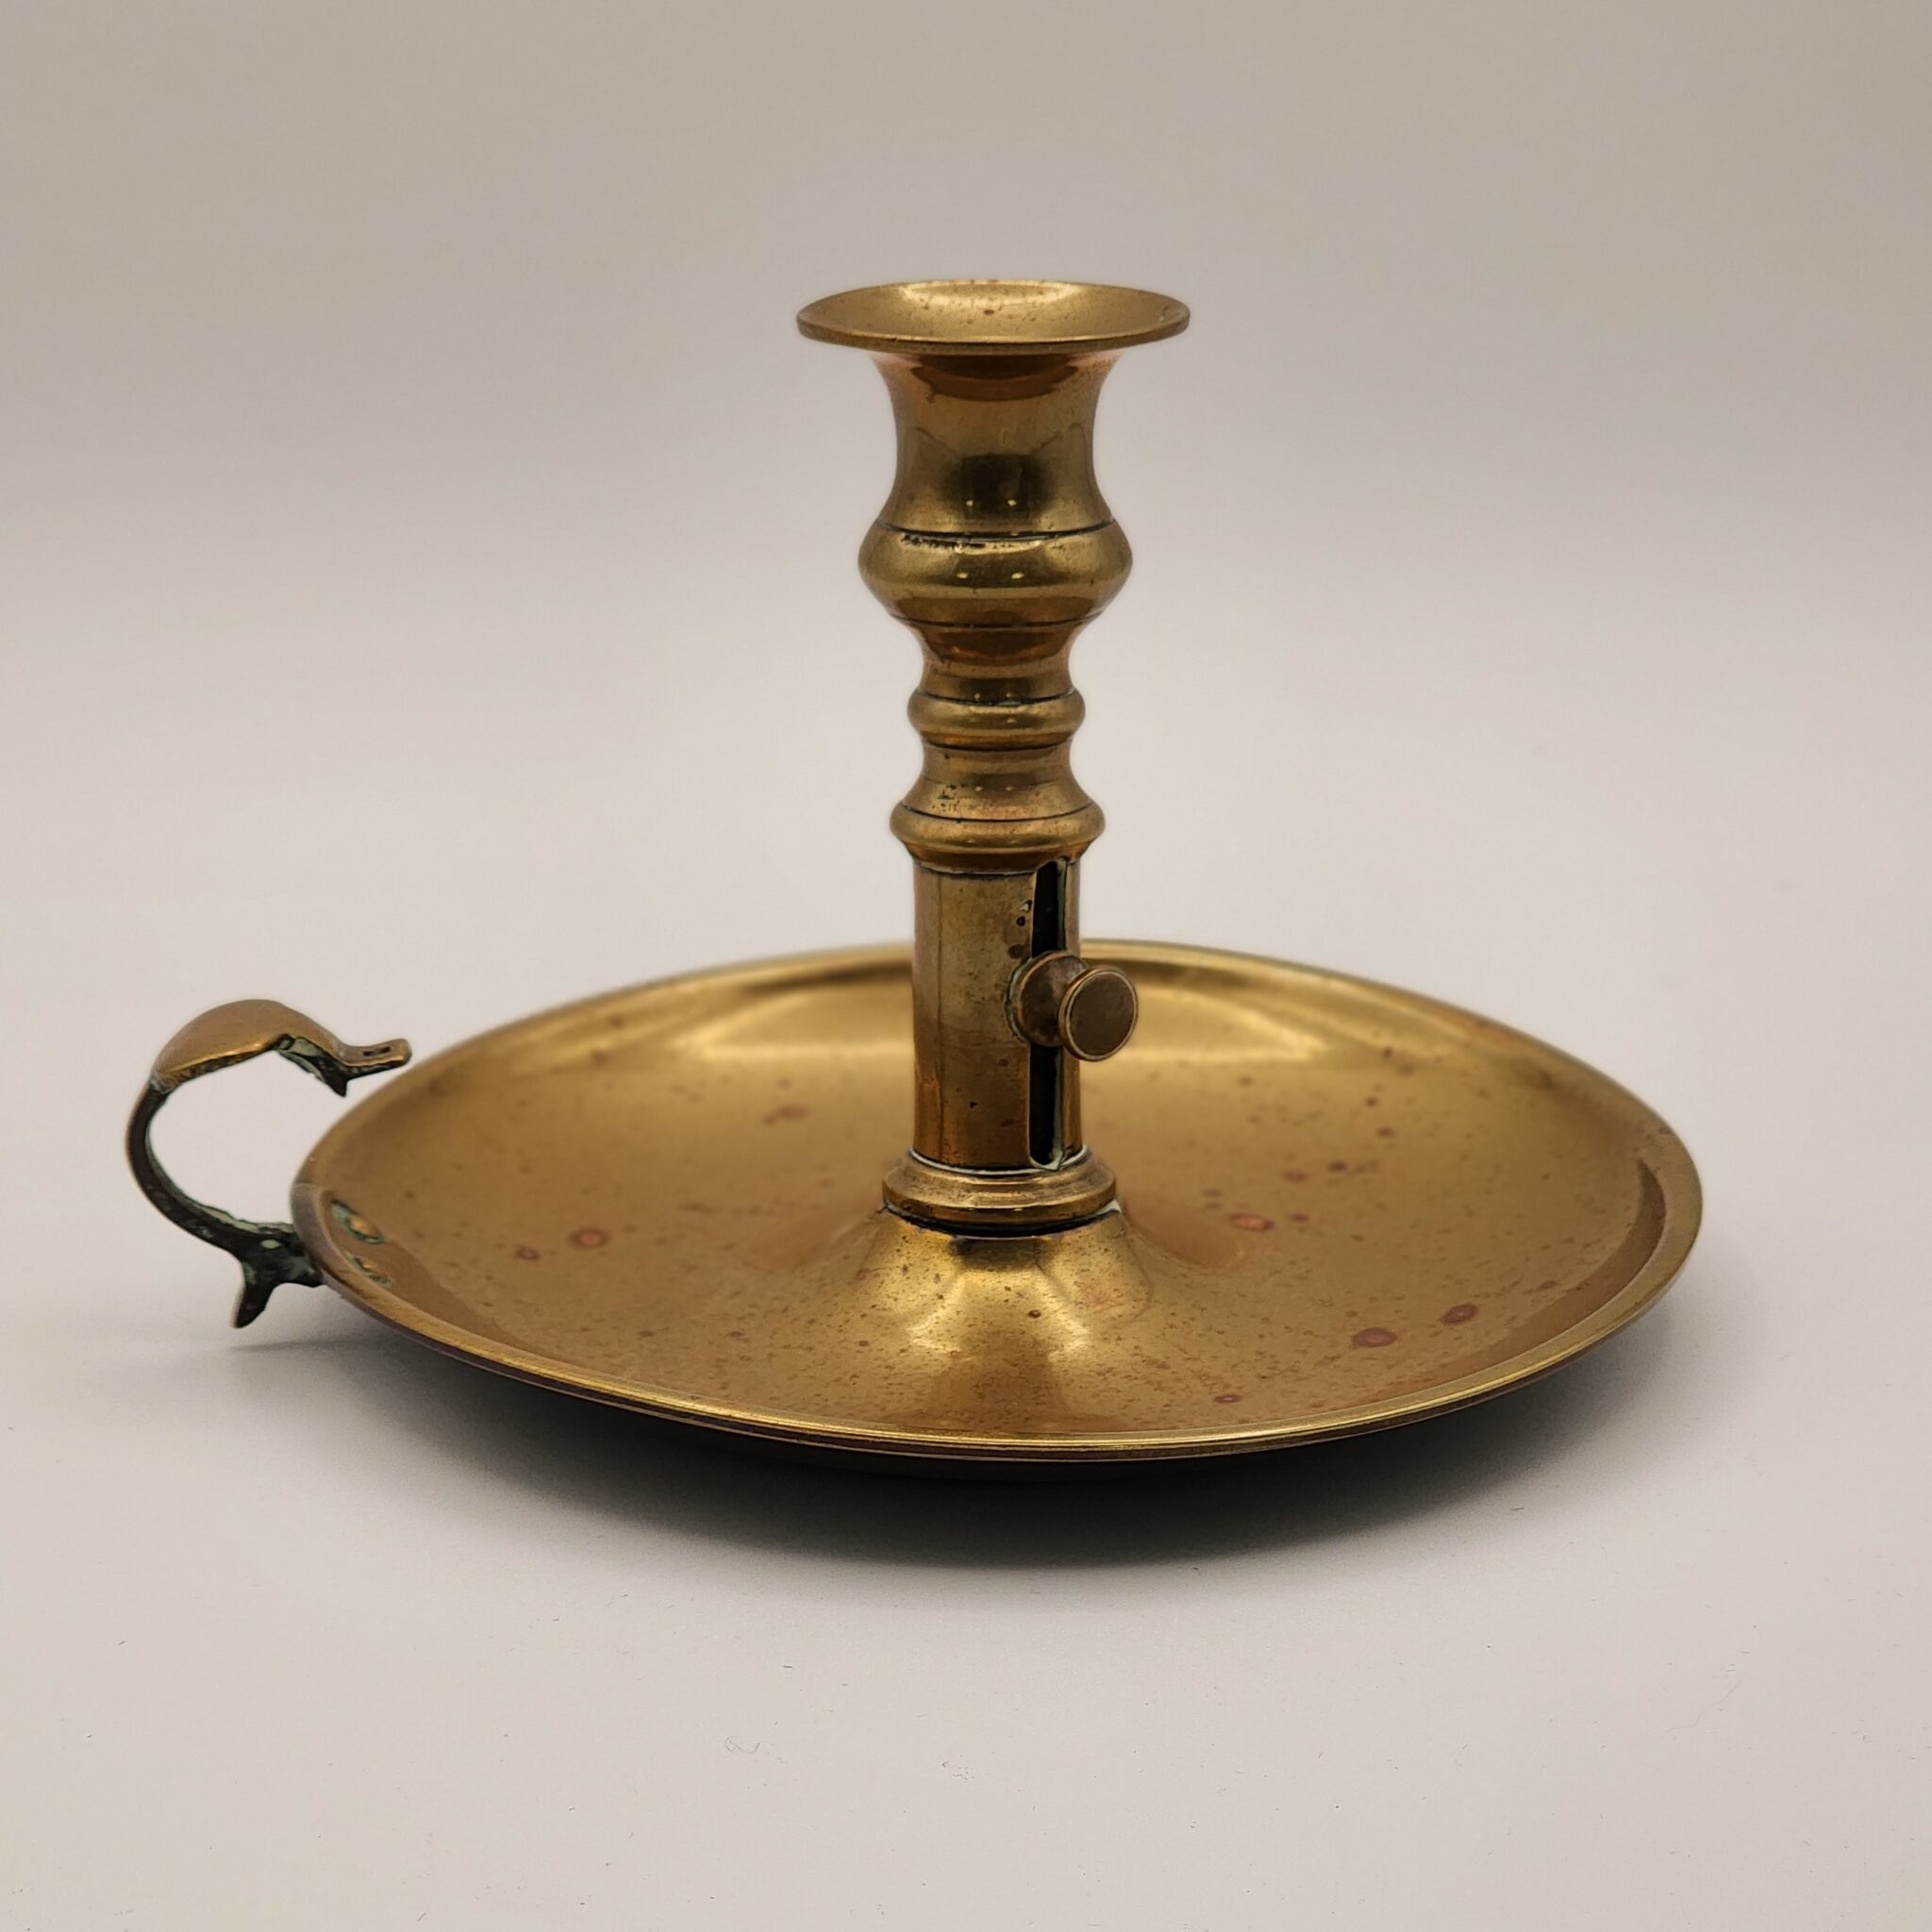 Antique English Brass Chamberstick |English Antiques - Caledonian, Inc.  Barrington, Il - 60010 (847) 381-0569